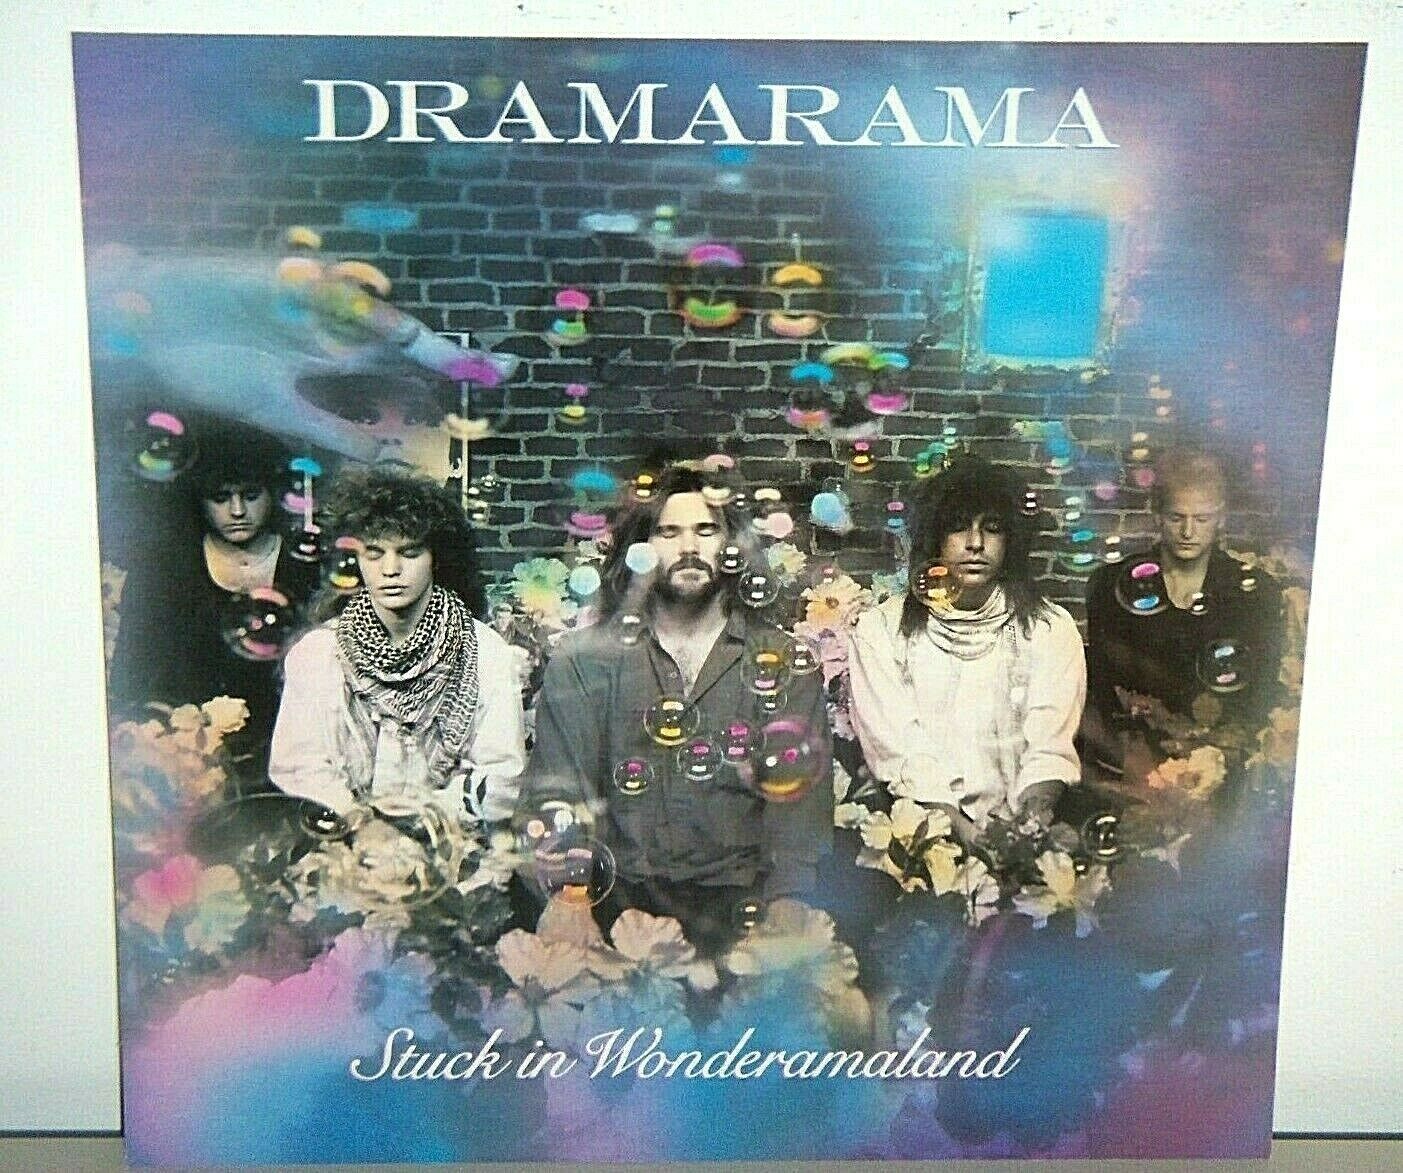 Dramarama Stuck In Wonderamaland Cardboard Promo Poster Flat